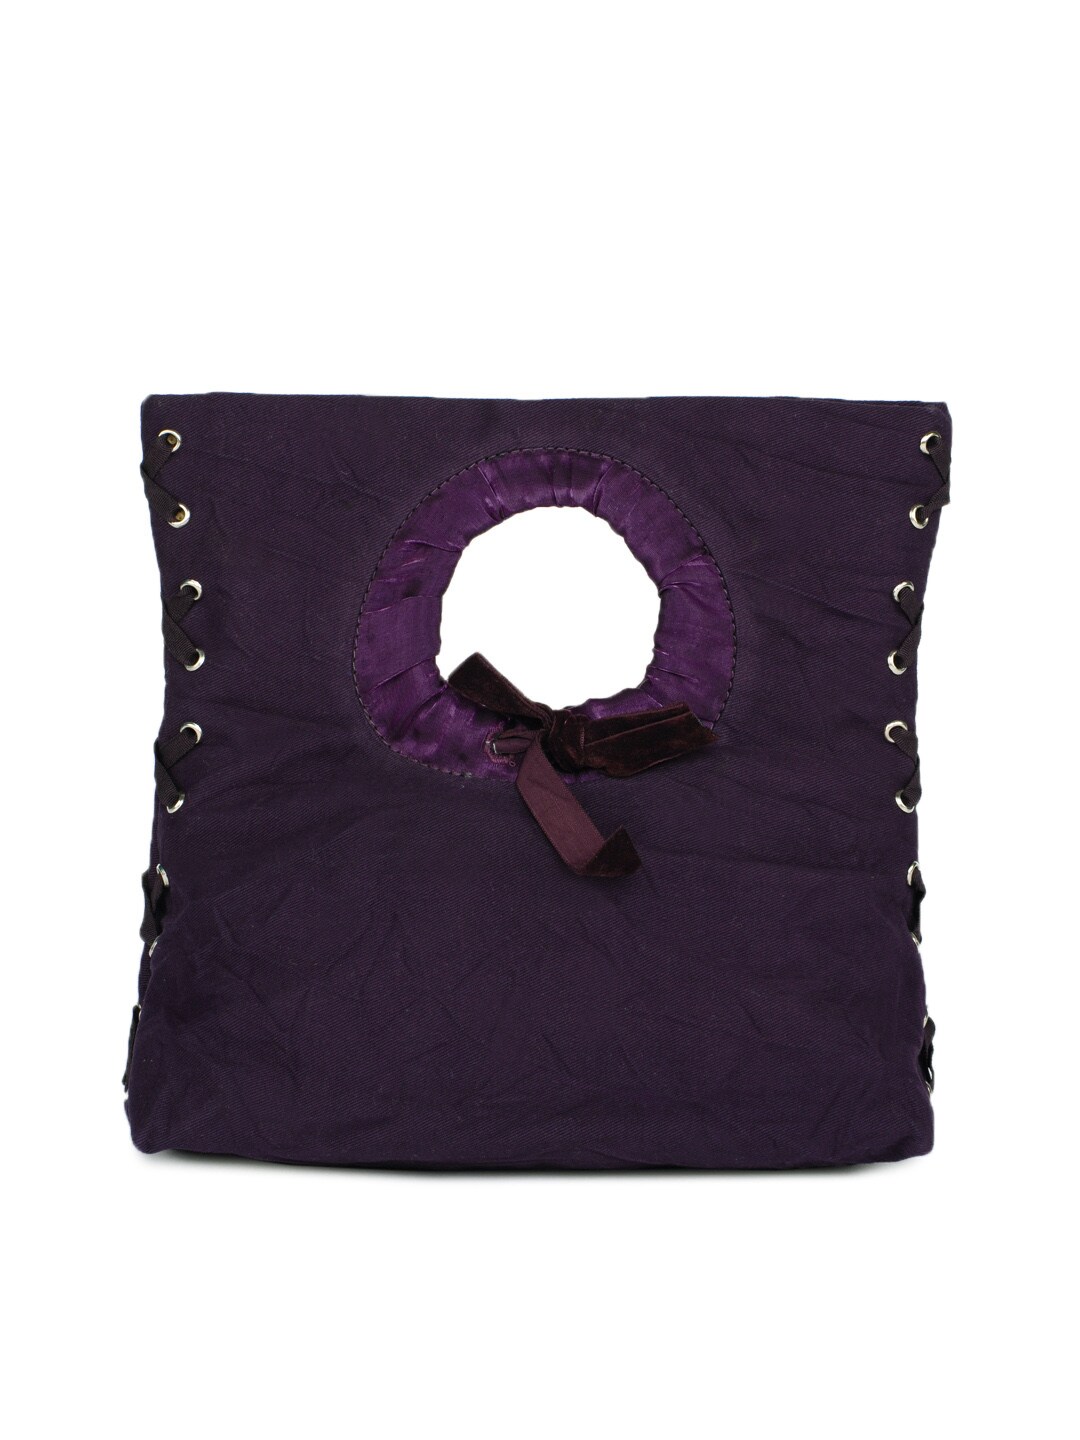 Baggit Women Gumboot Camlincrush Purple Handbag